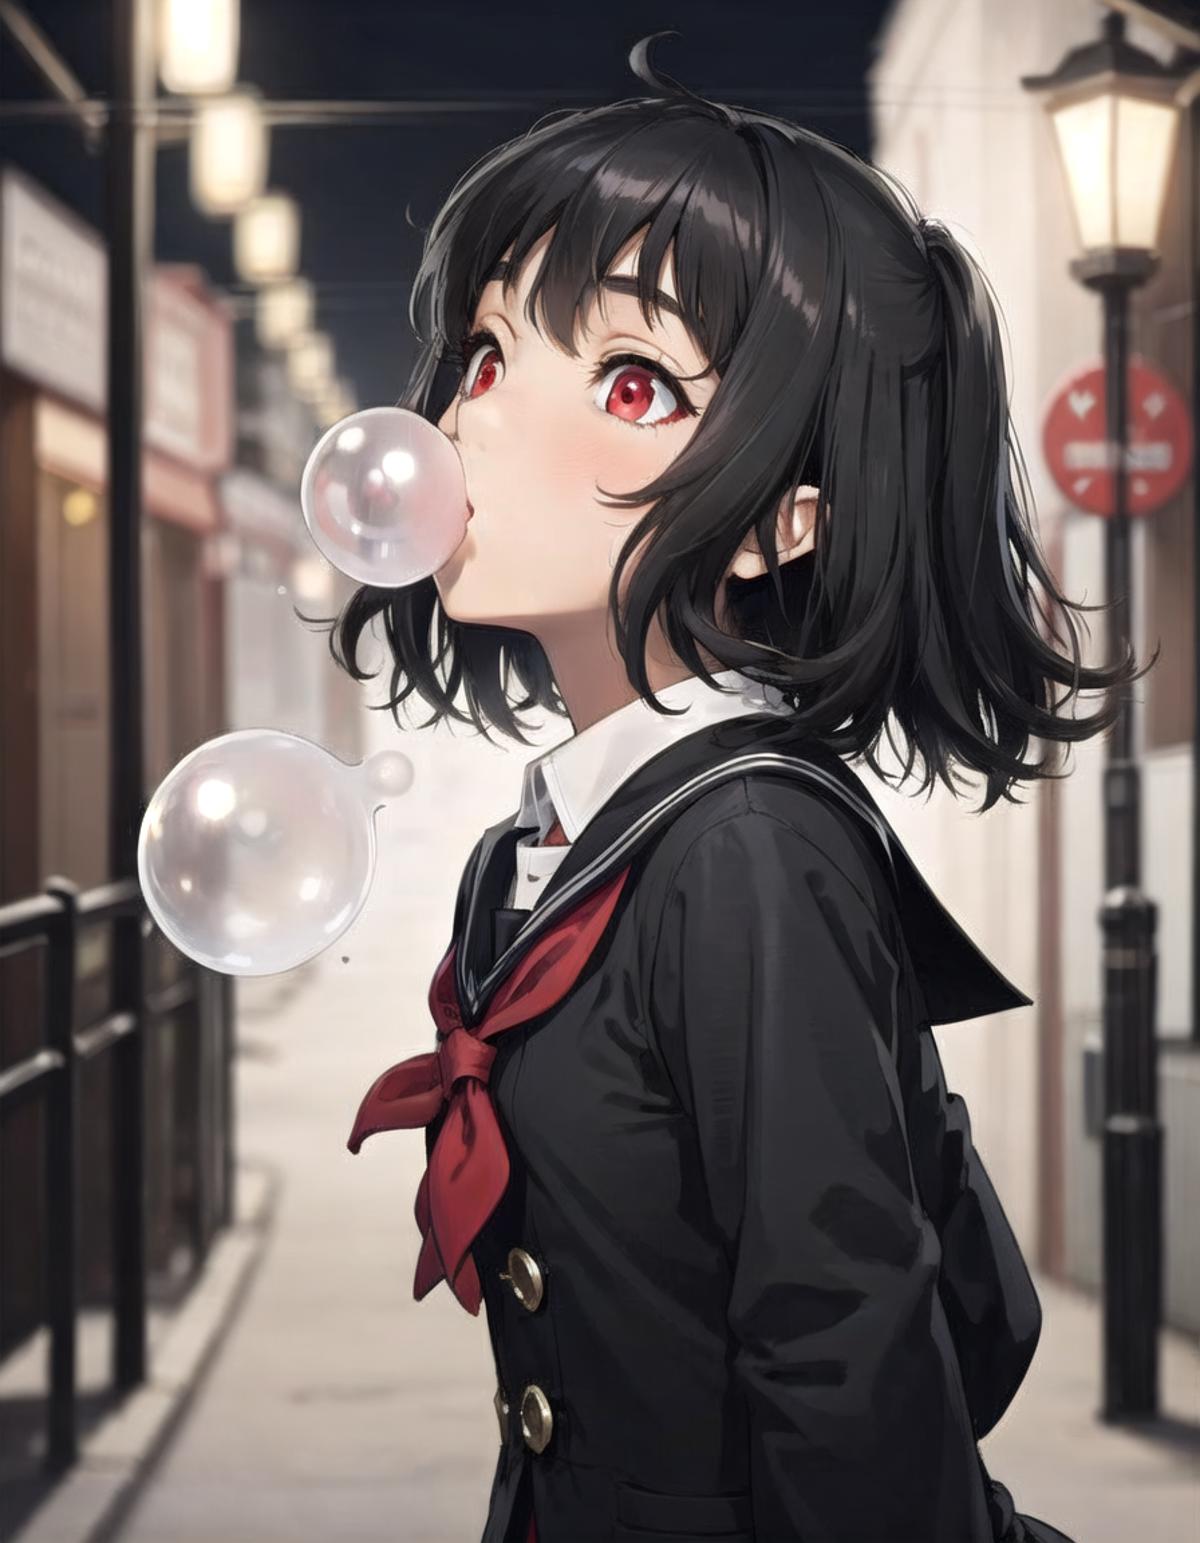 Bubble Gum (バブルガム / 泡泡糖 / Kaugummi) v2.0 image by WhisPerMan